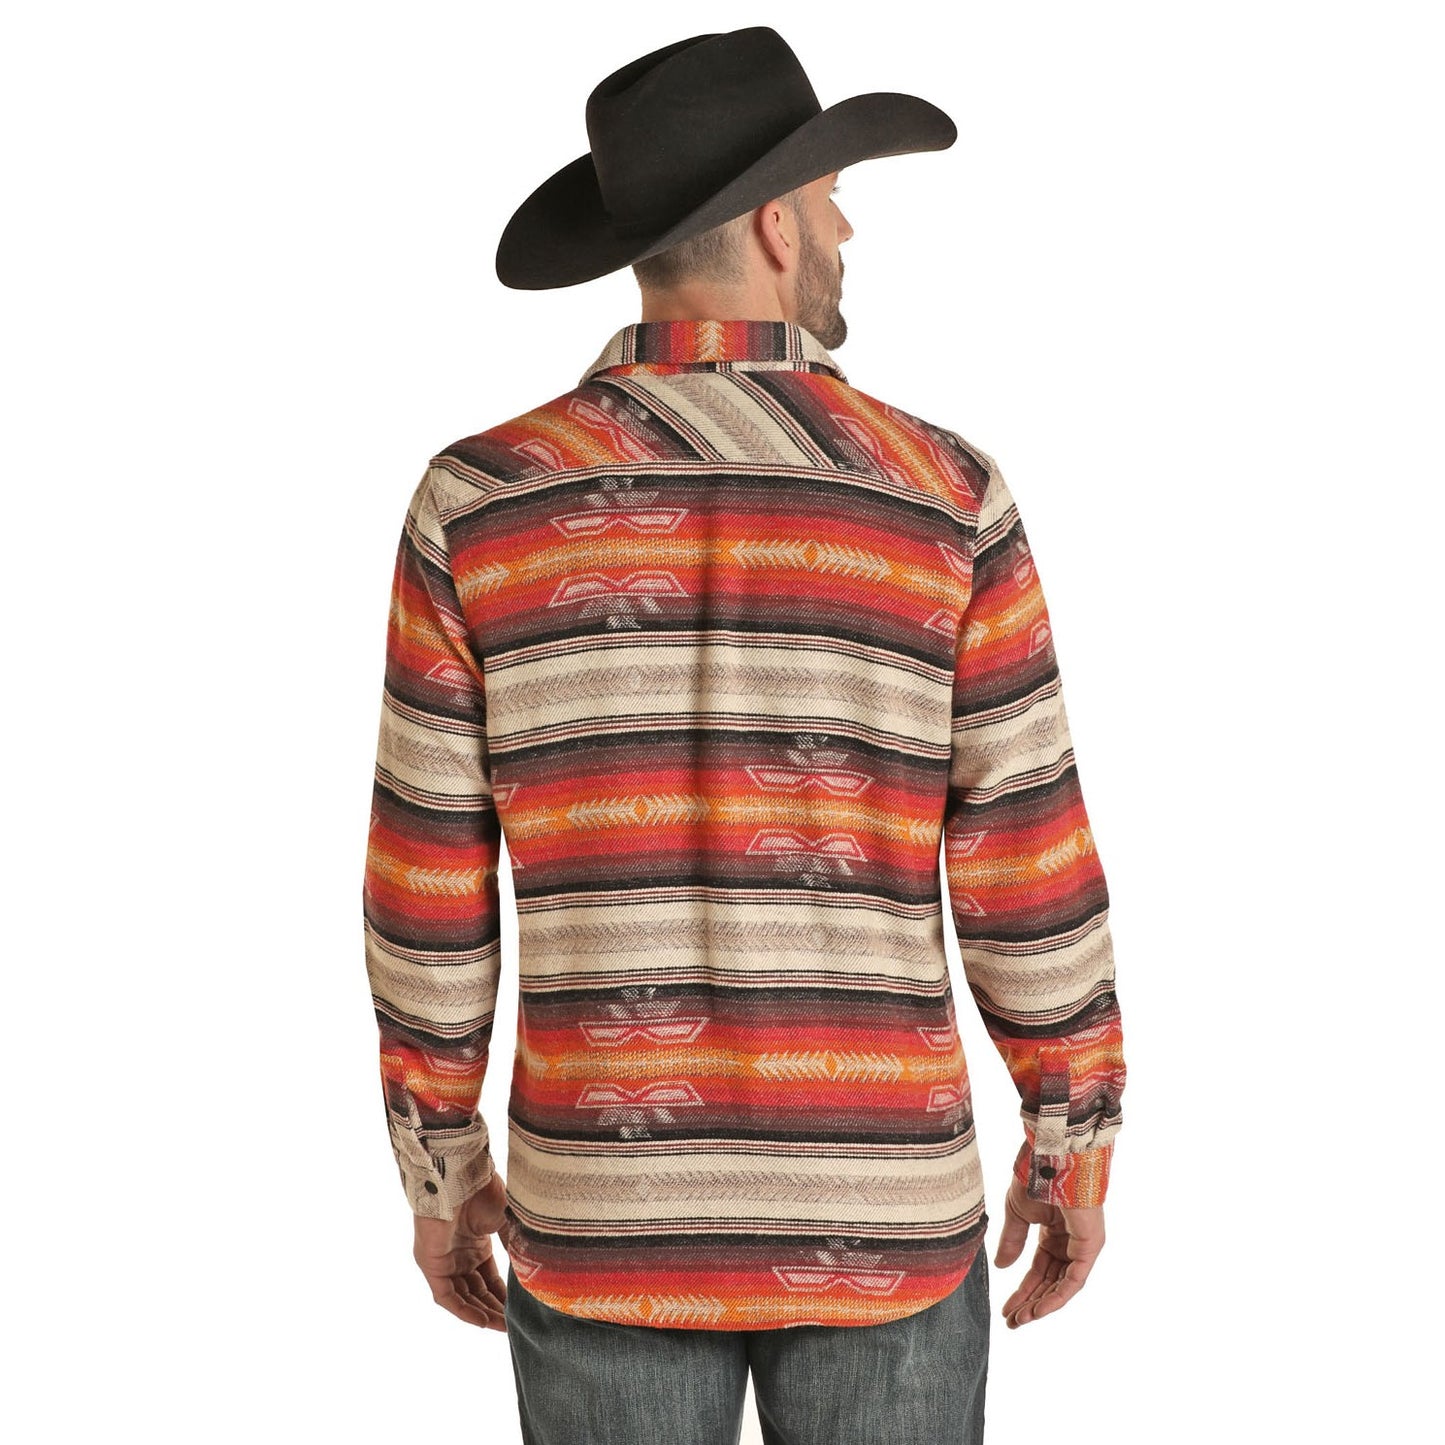 Rock & Roll Cowboy Men's Aztec Jacquard Tan Shirt Jacket 92-1116